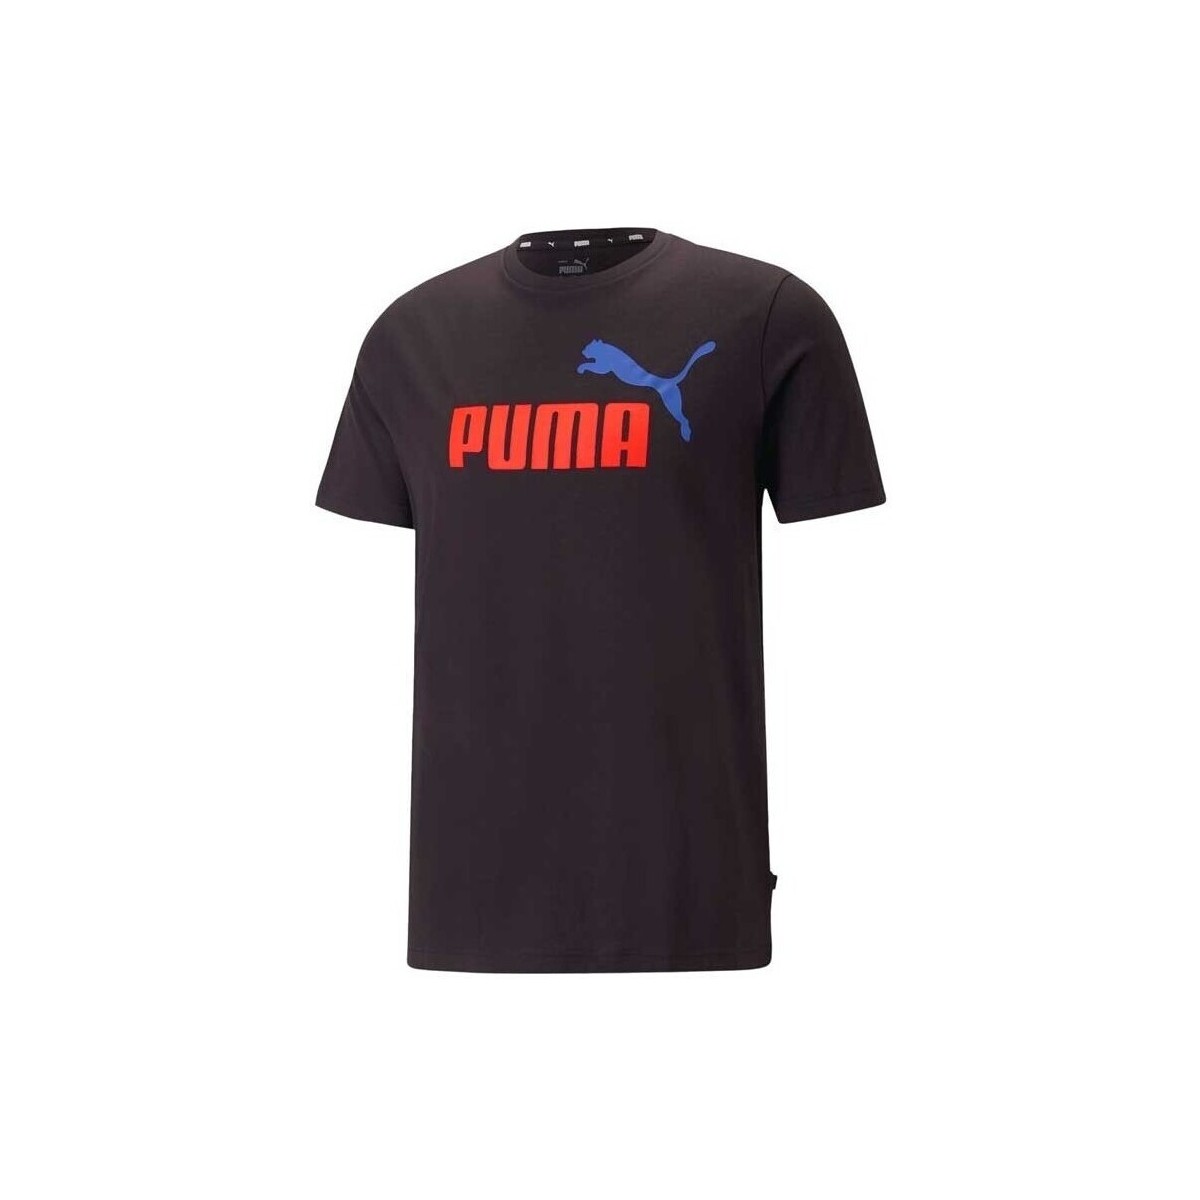 textil Hombre Camisetas manga corta Puma ESS+2 Negro